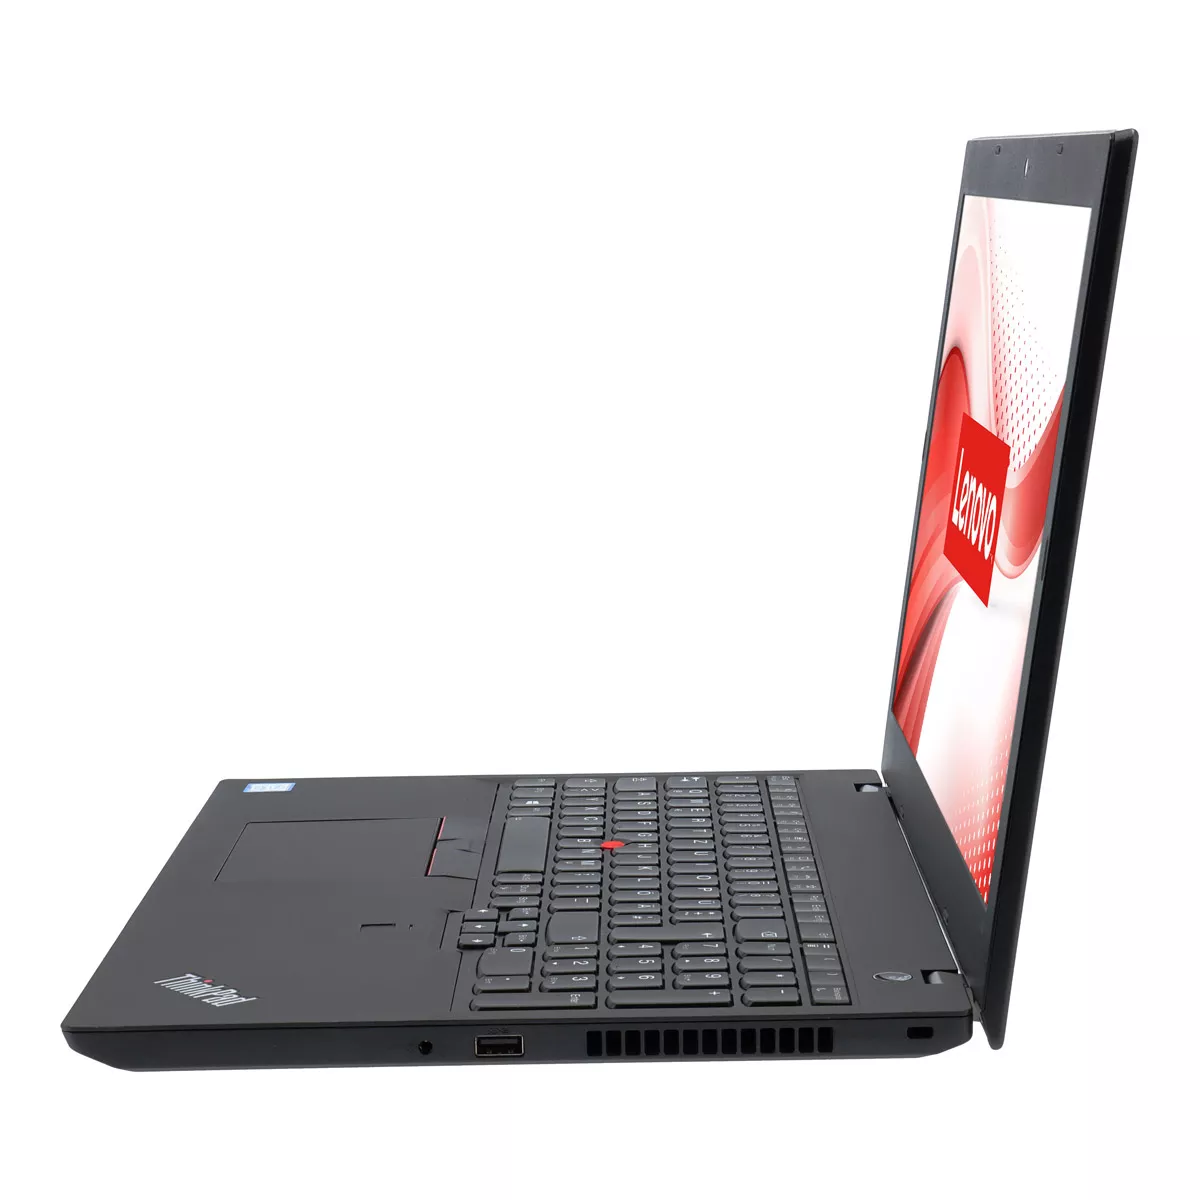 Lenovo ThinkPad L580 Core i5 8350U Full-HD 240 GB M.2 nVME SSD Webcam A